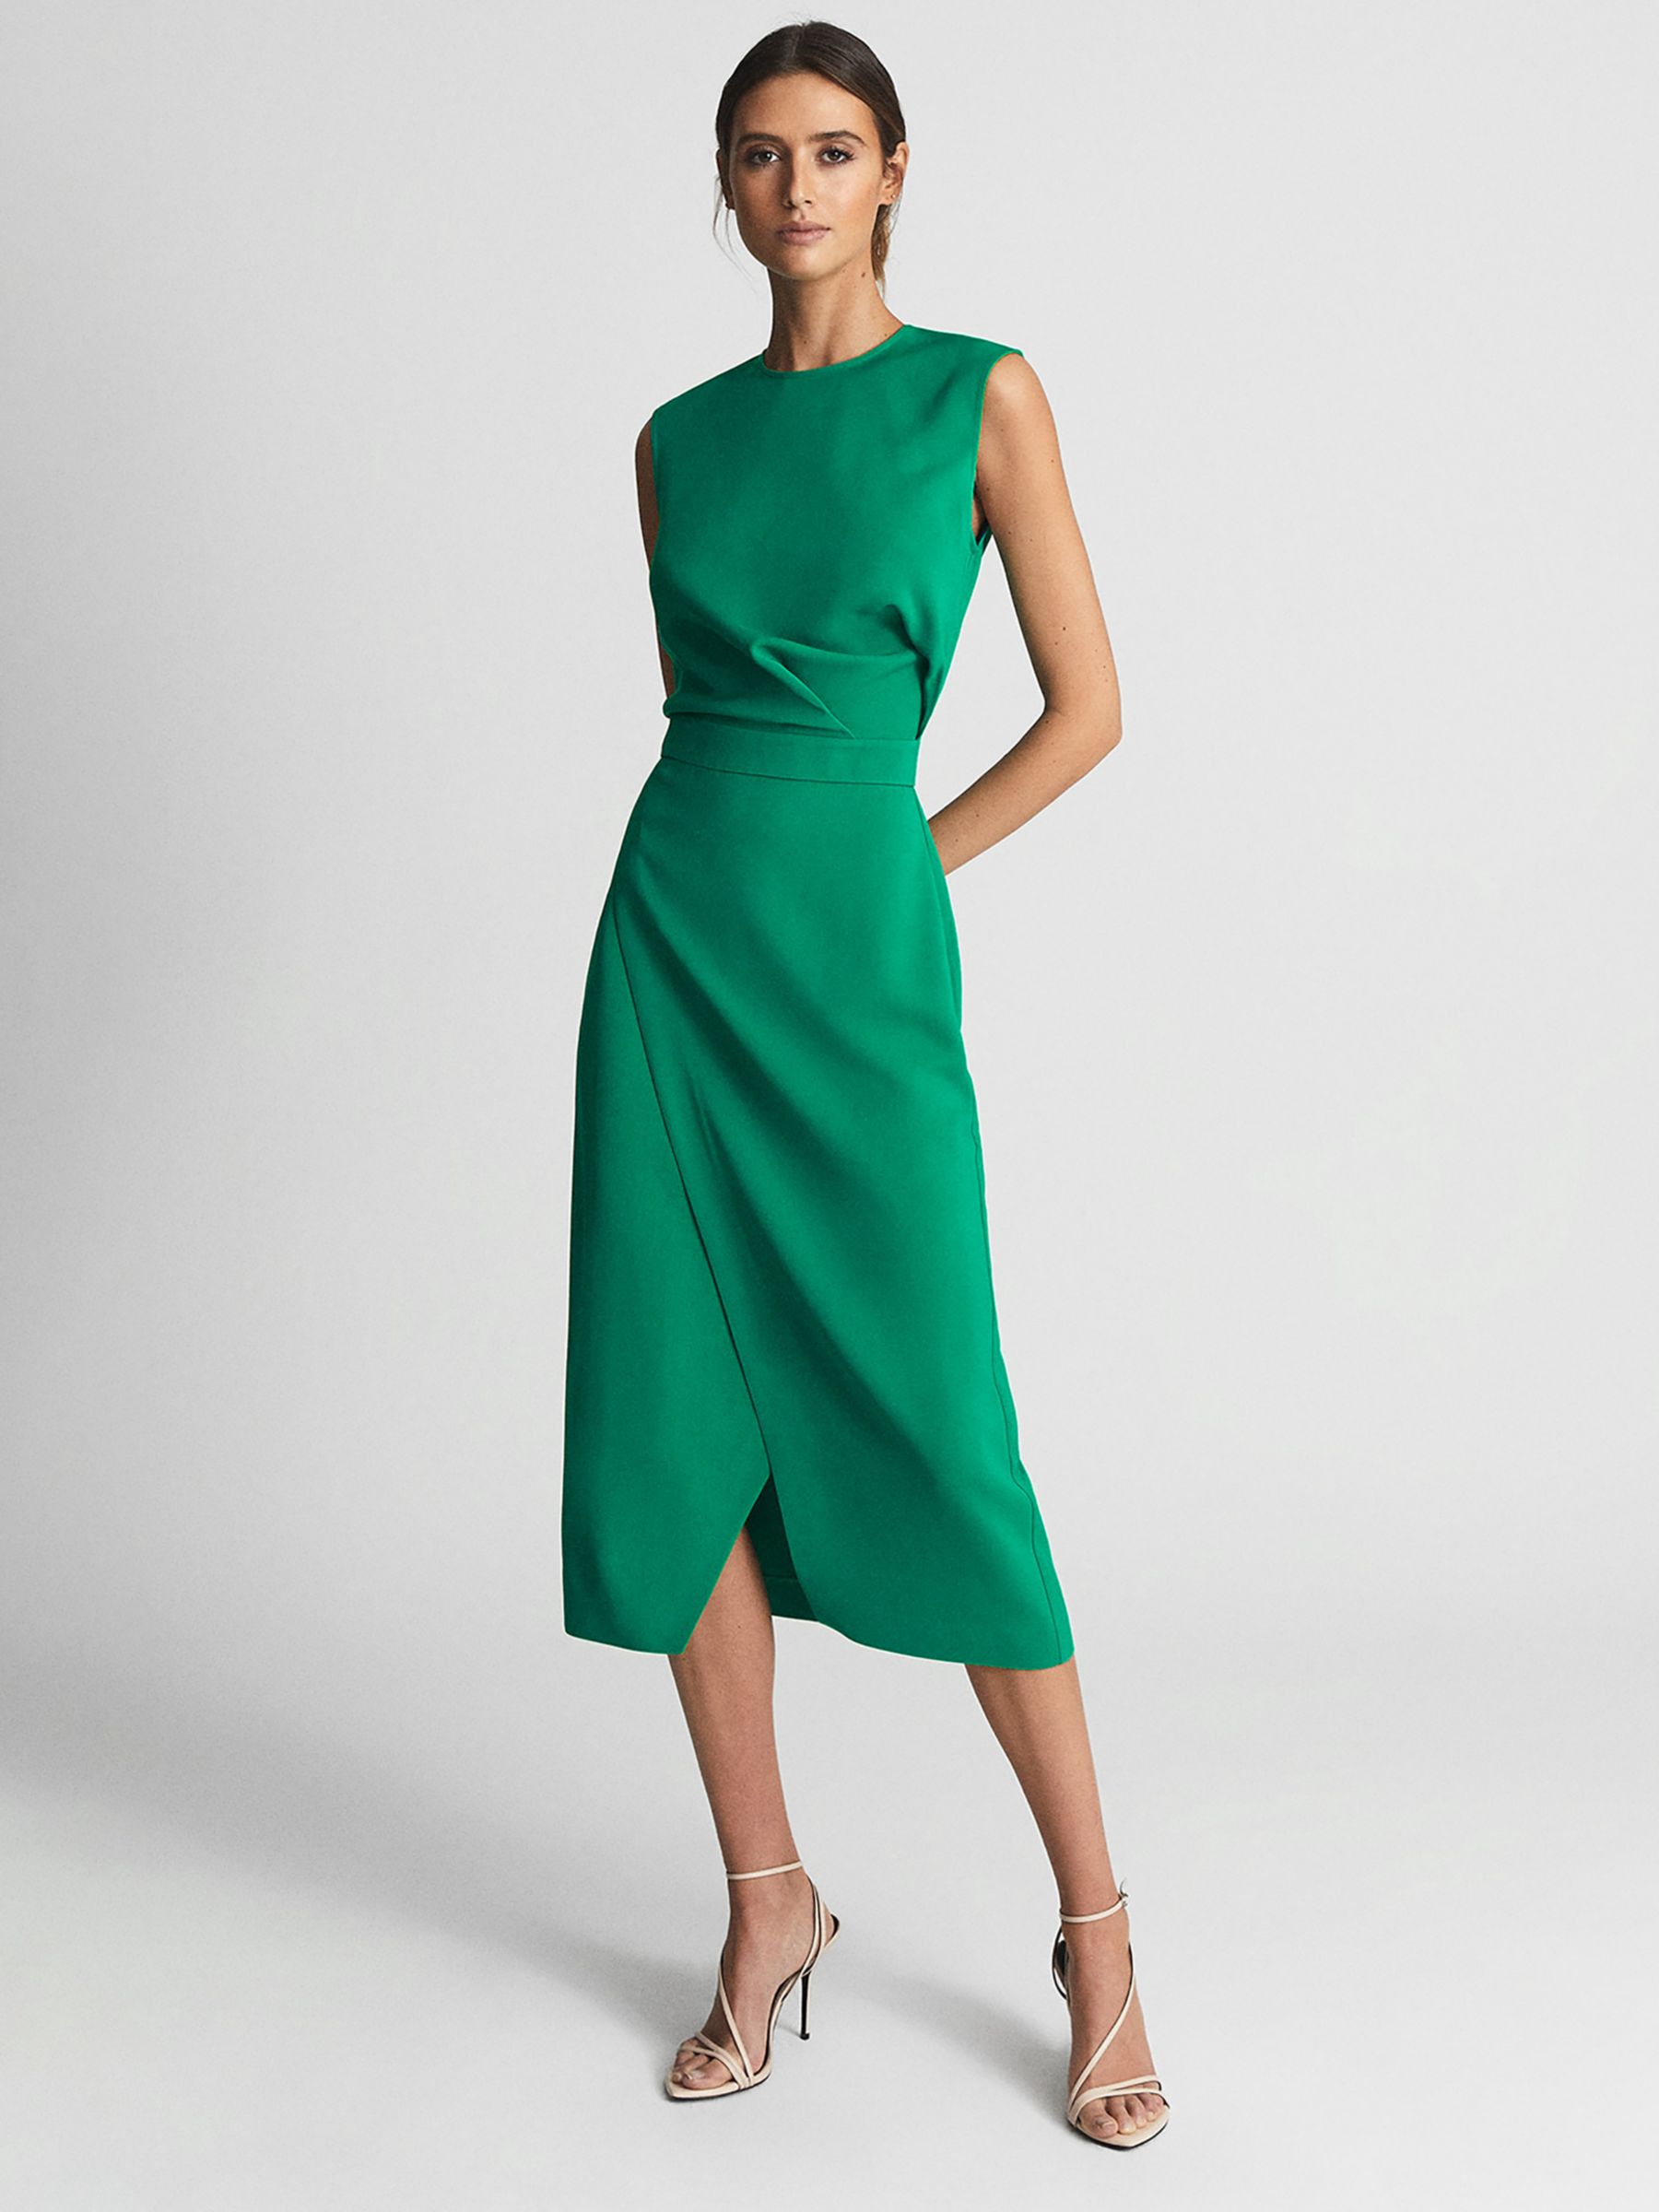 Reiss Layla Sleeveless Dress, Green, 14